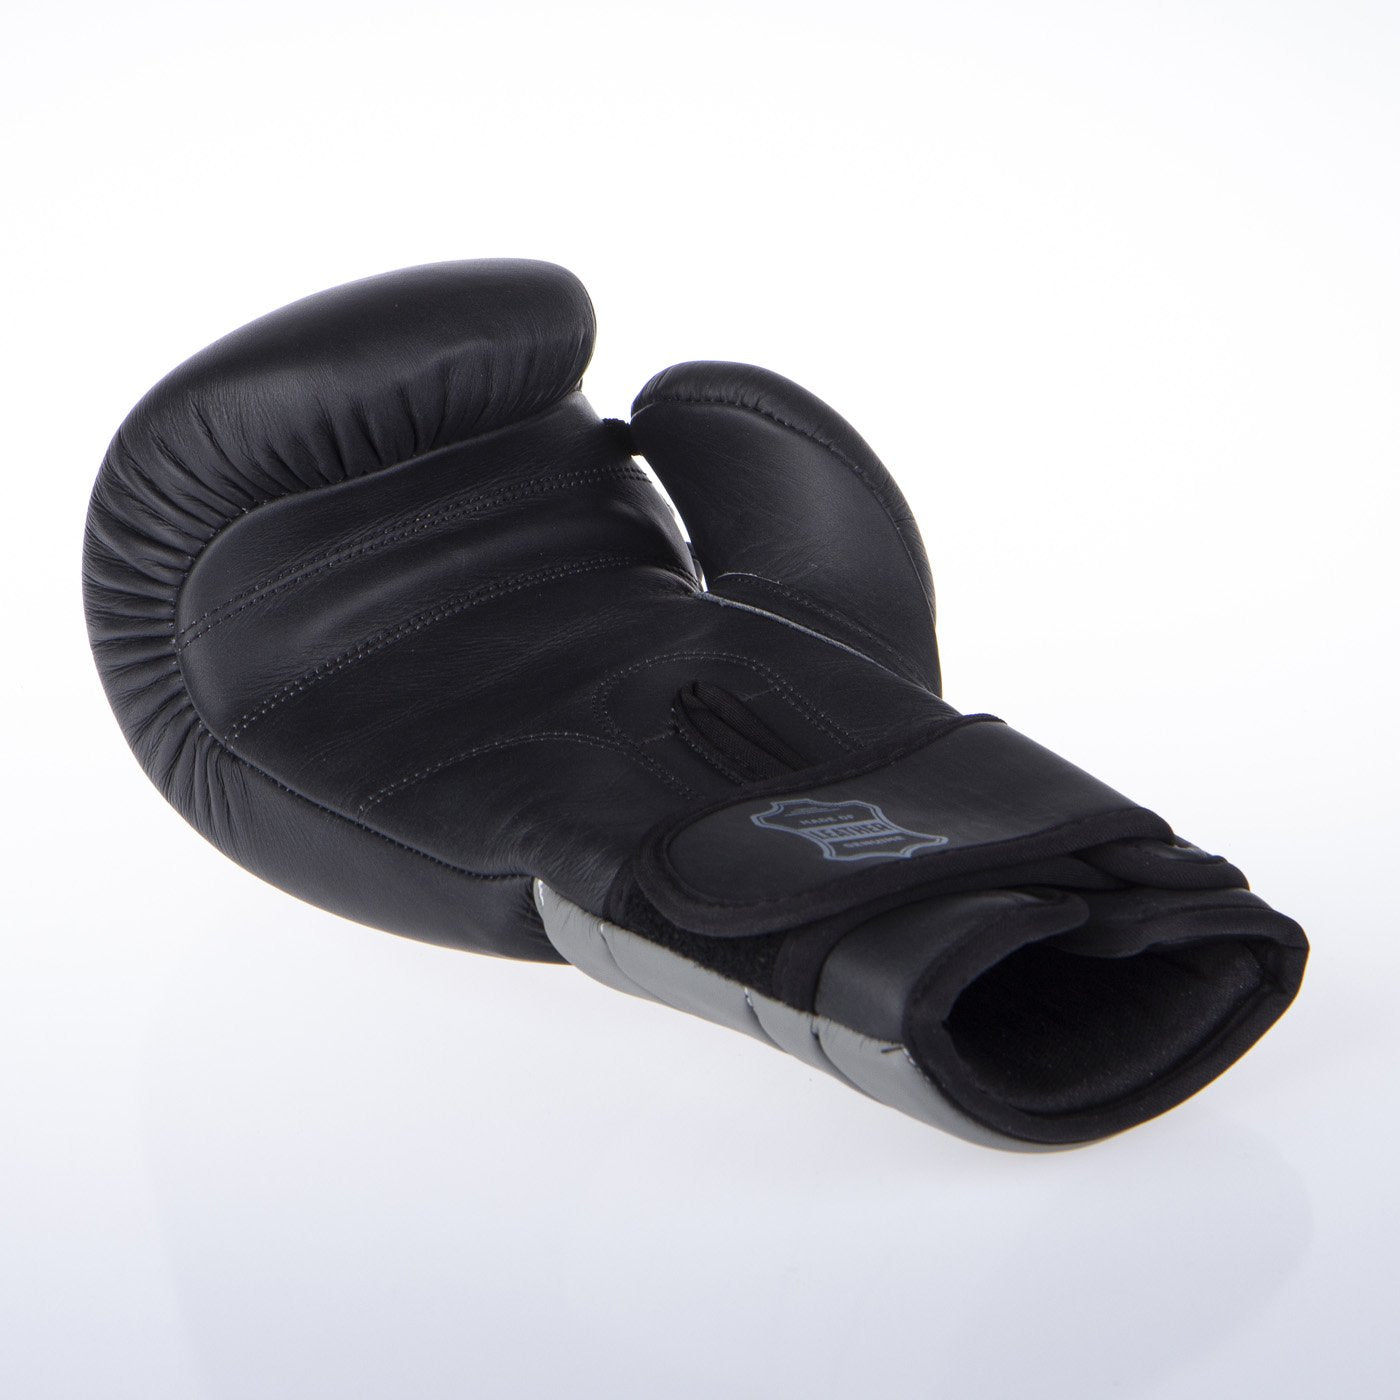 Fighter Boxing Gloves Sparring - black/grey